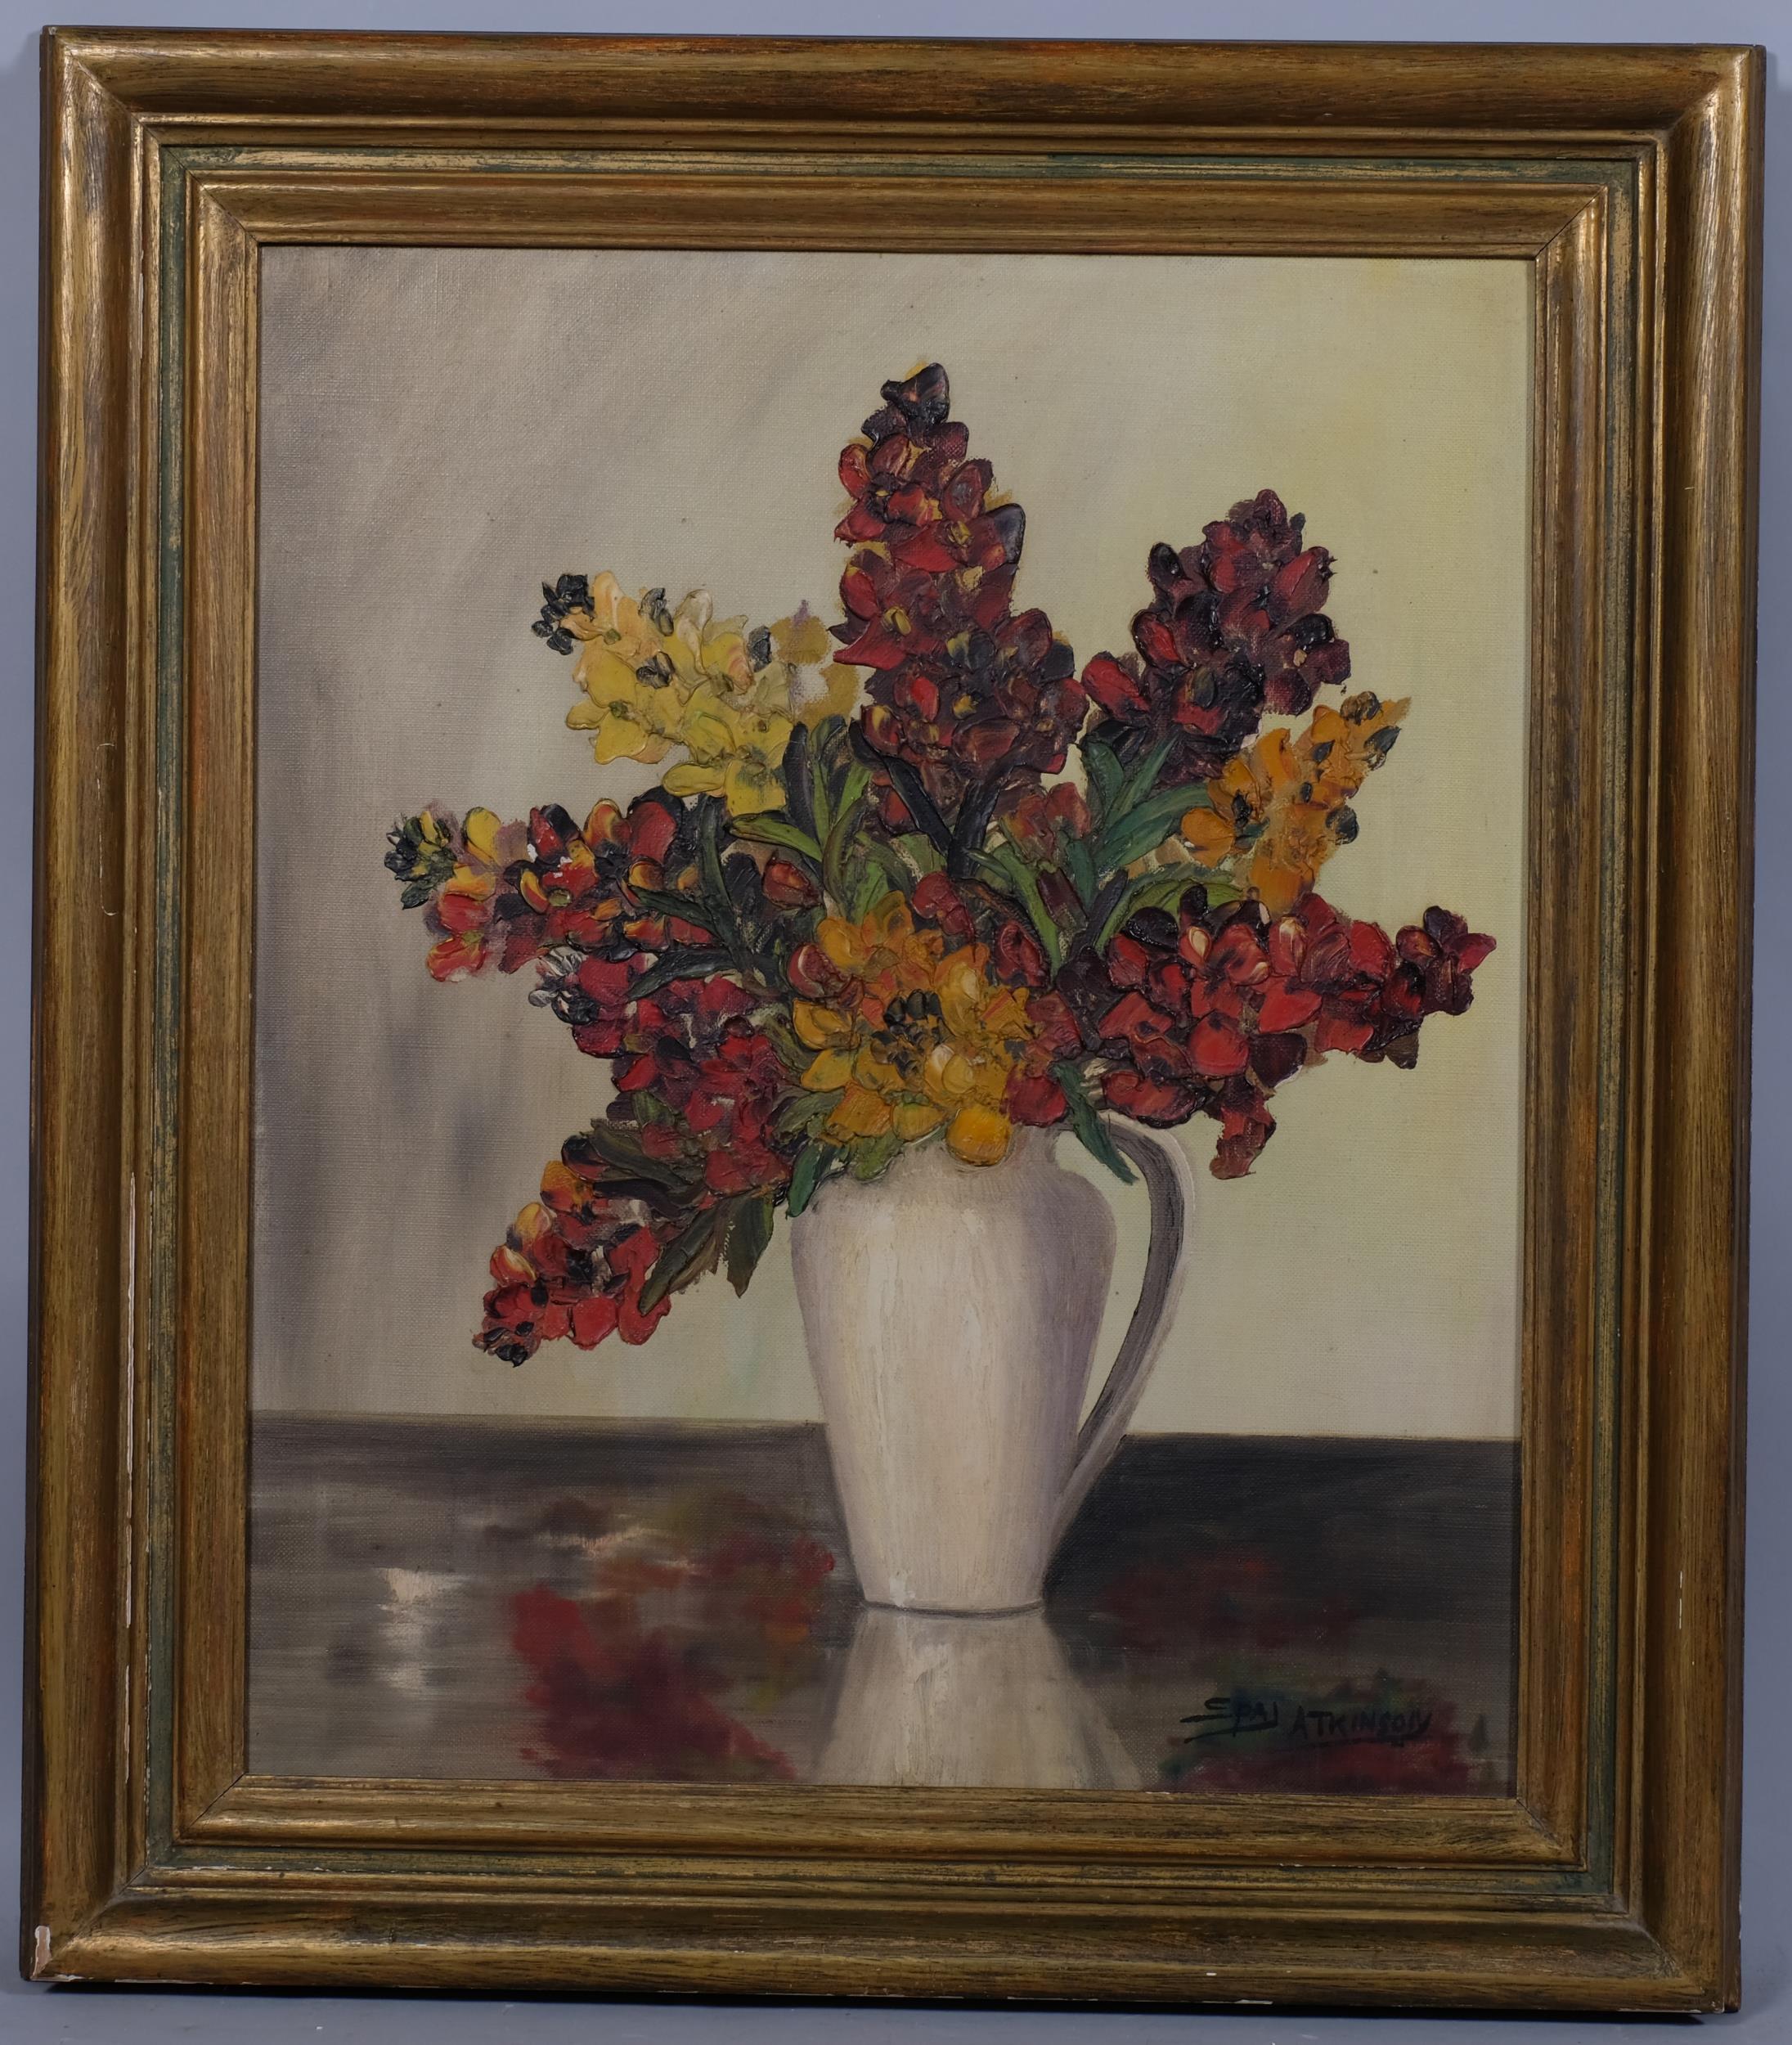 Spaj Atkinson (born 1899), still life flowers, oil on canvas, signed, 60cm x 50cm, framed Good